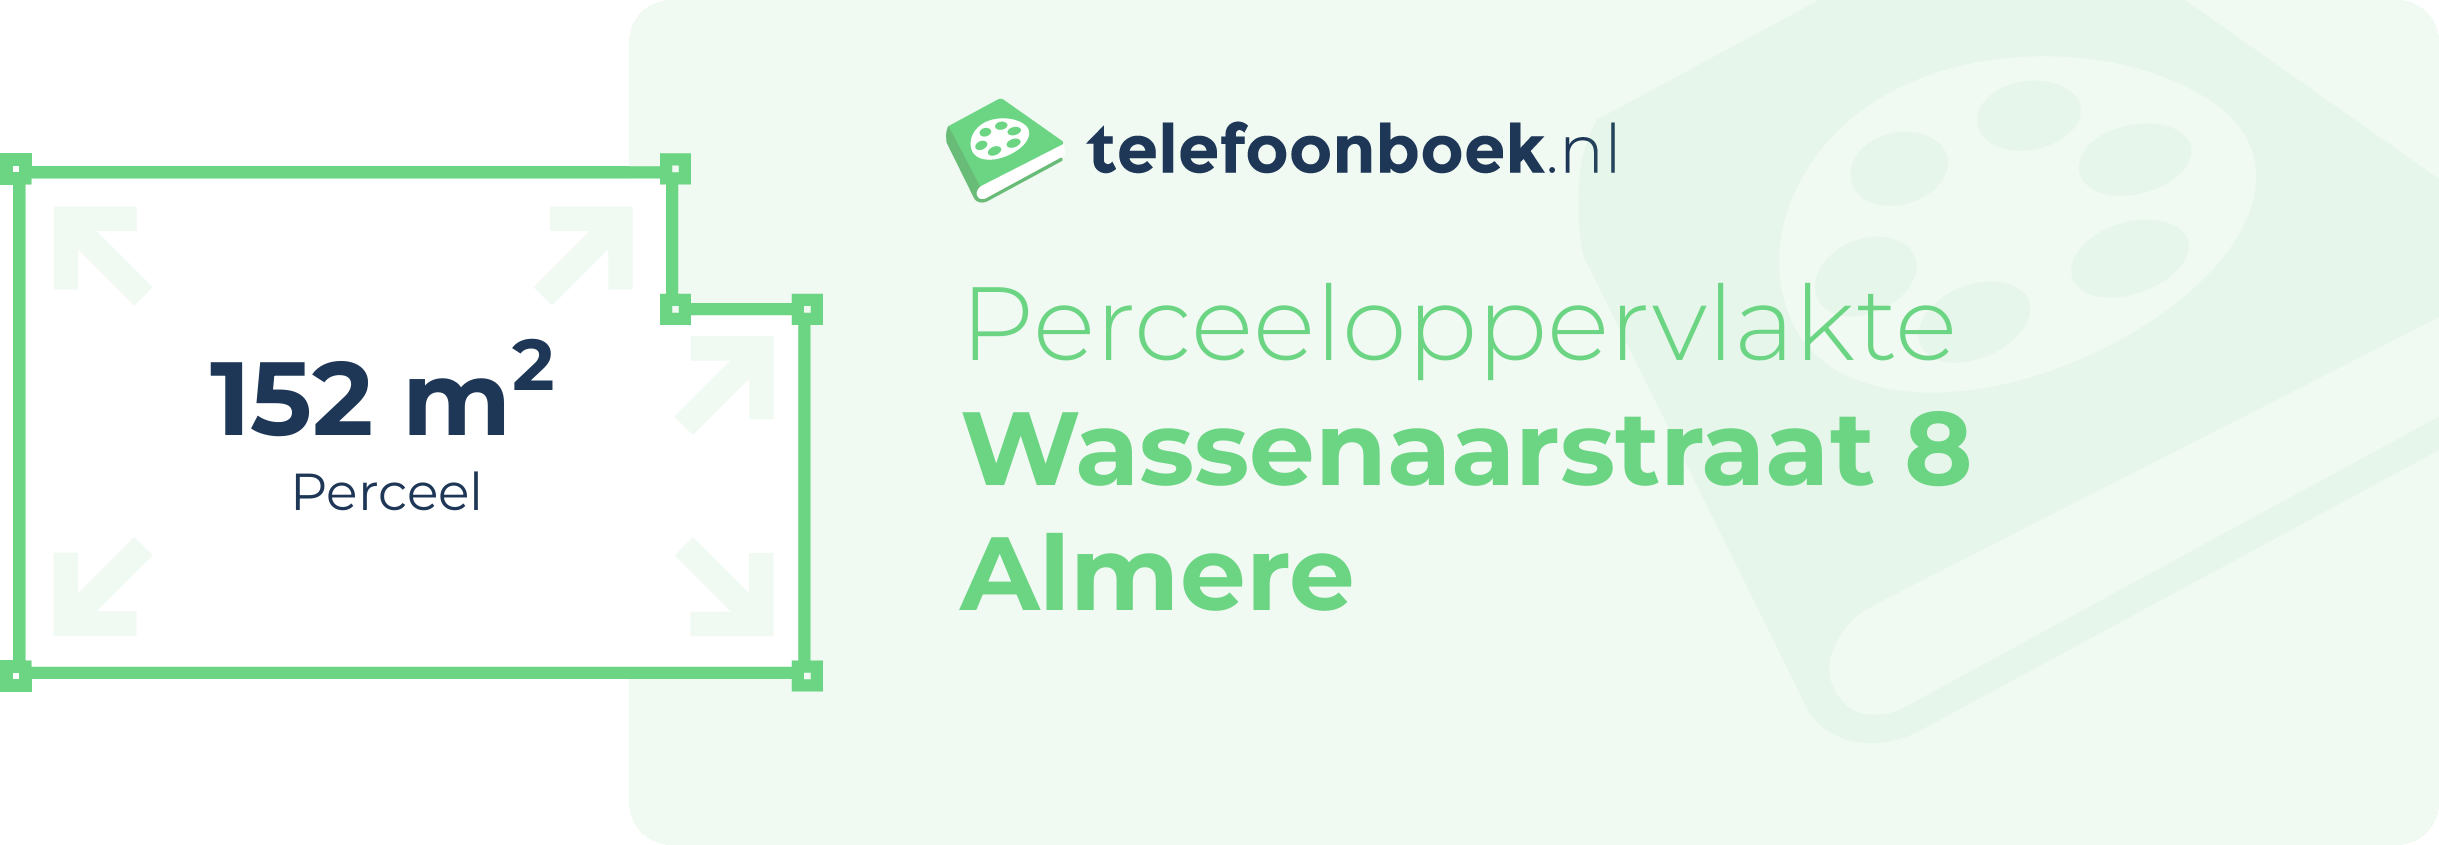 Perceeloppervlakte Wassenaarstraat 8 Almere